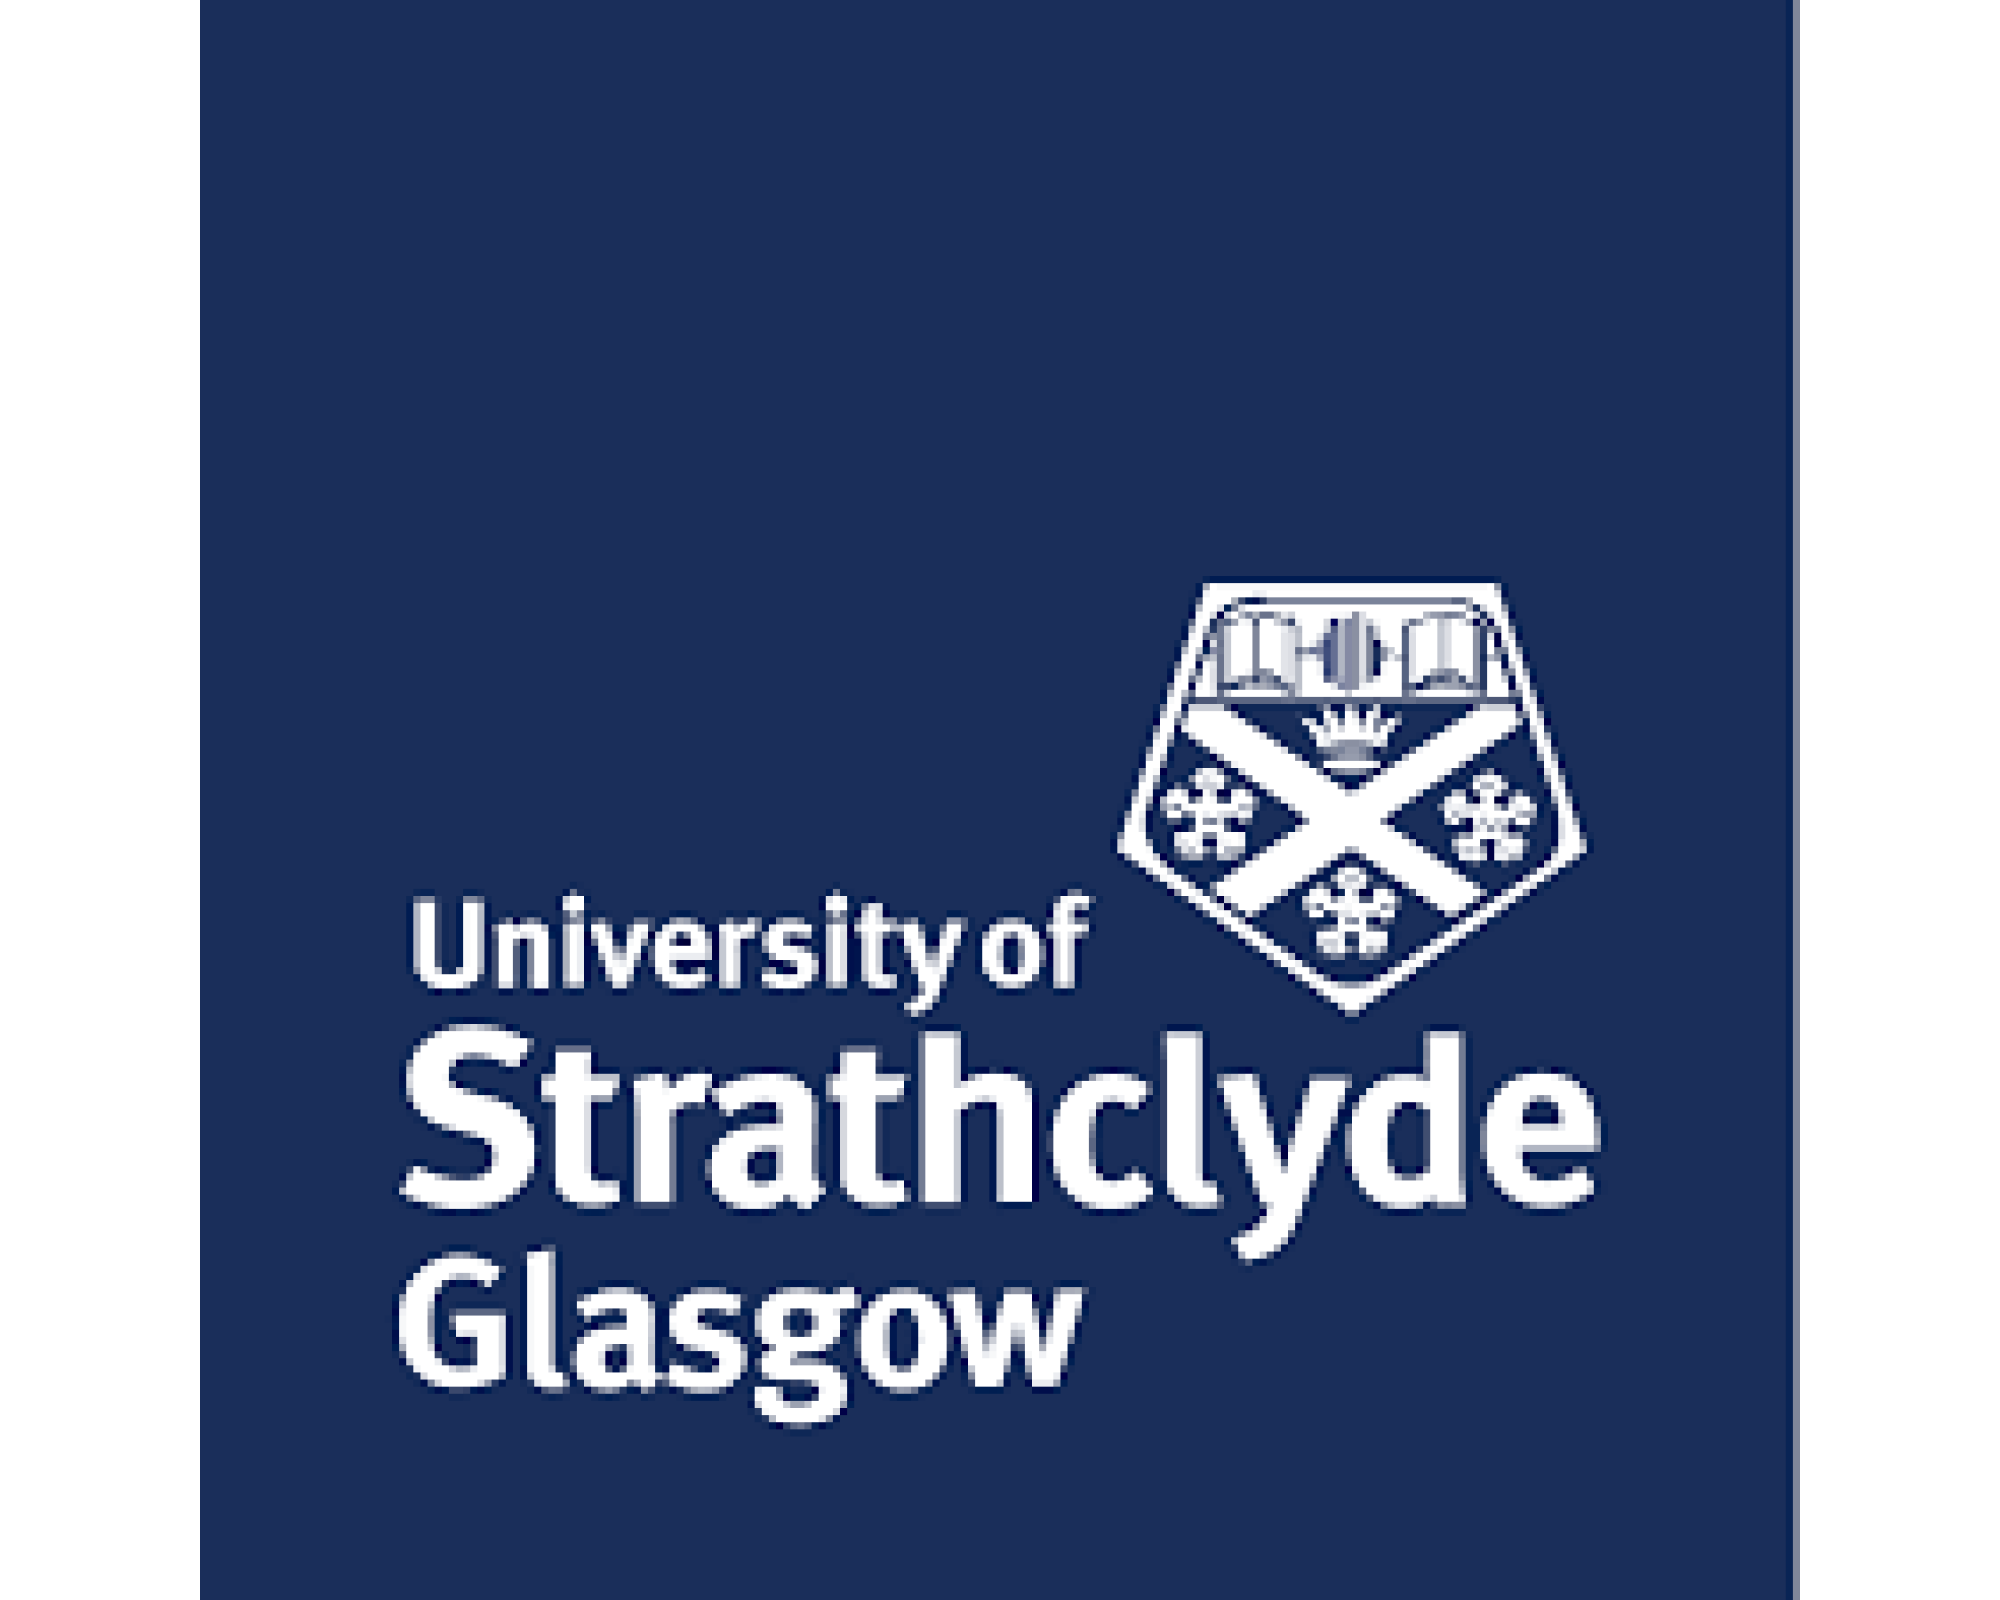 University of Strathclyde